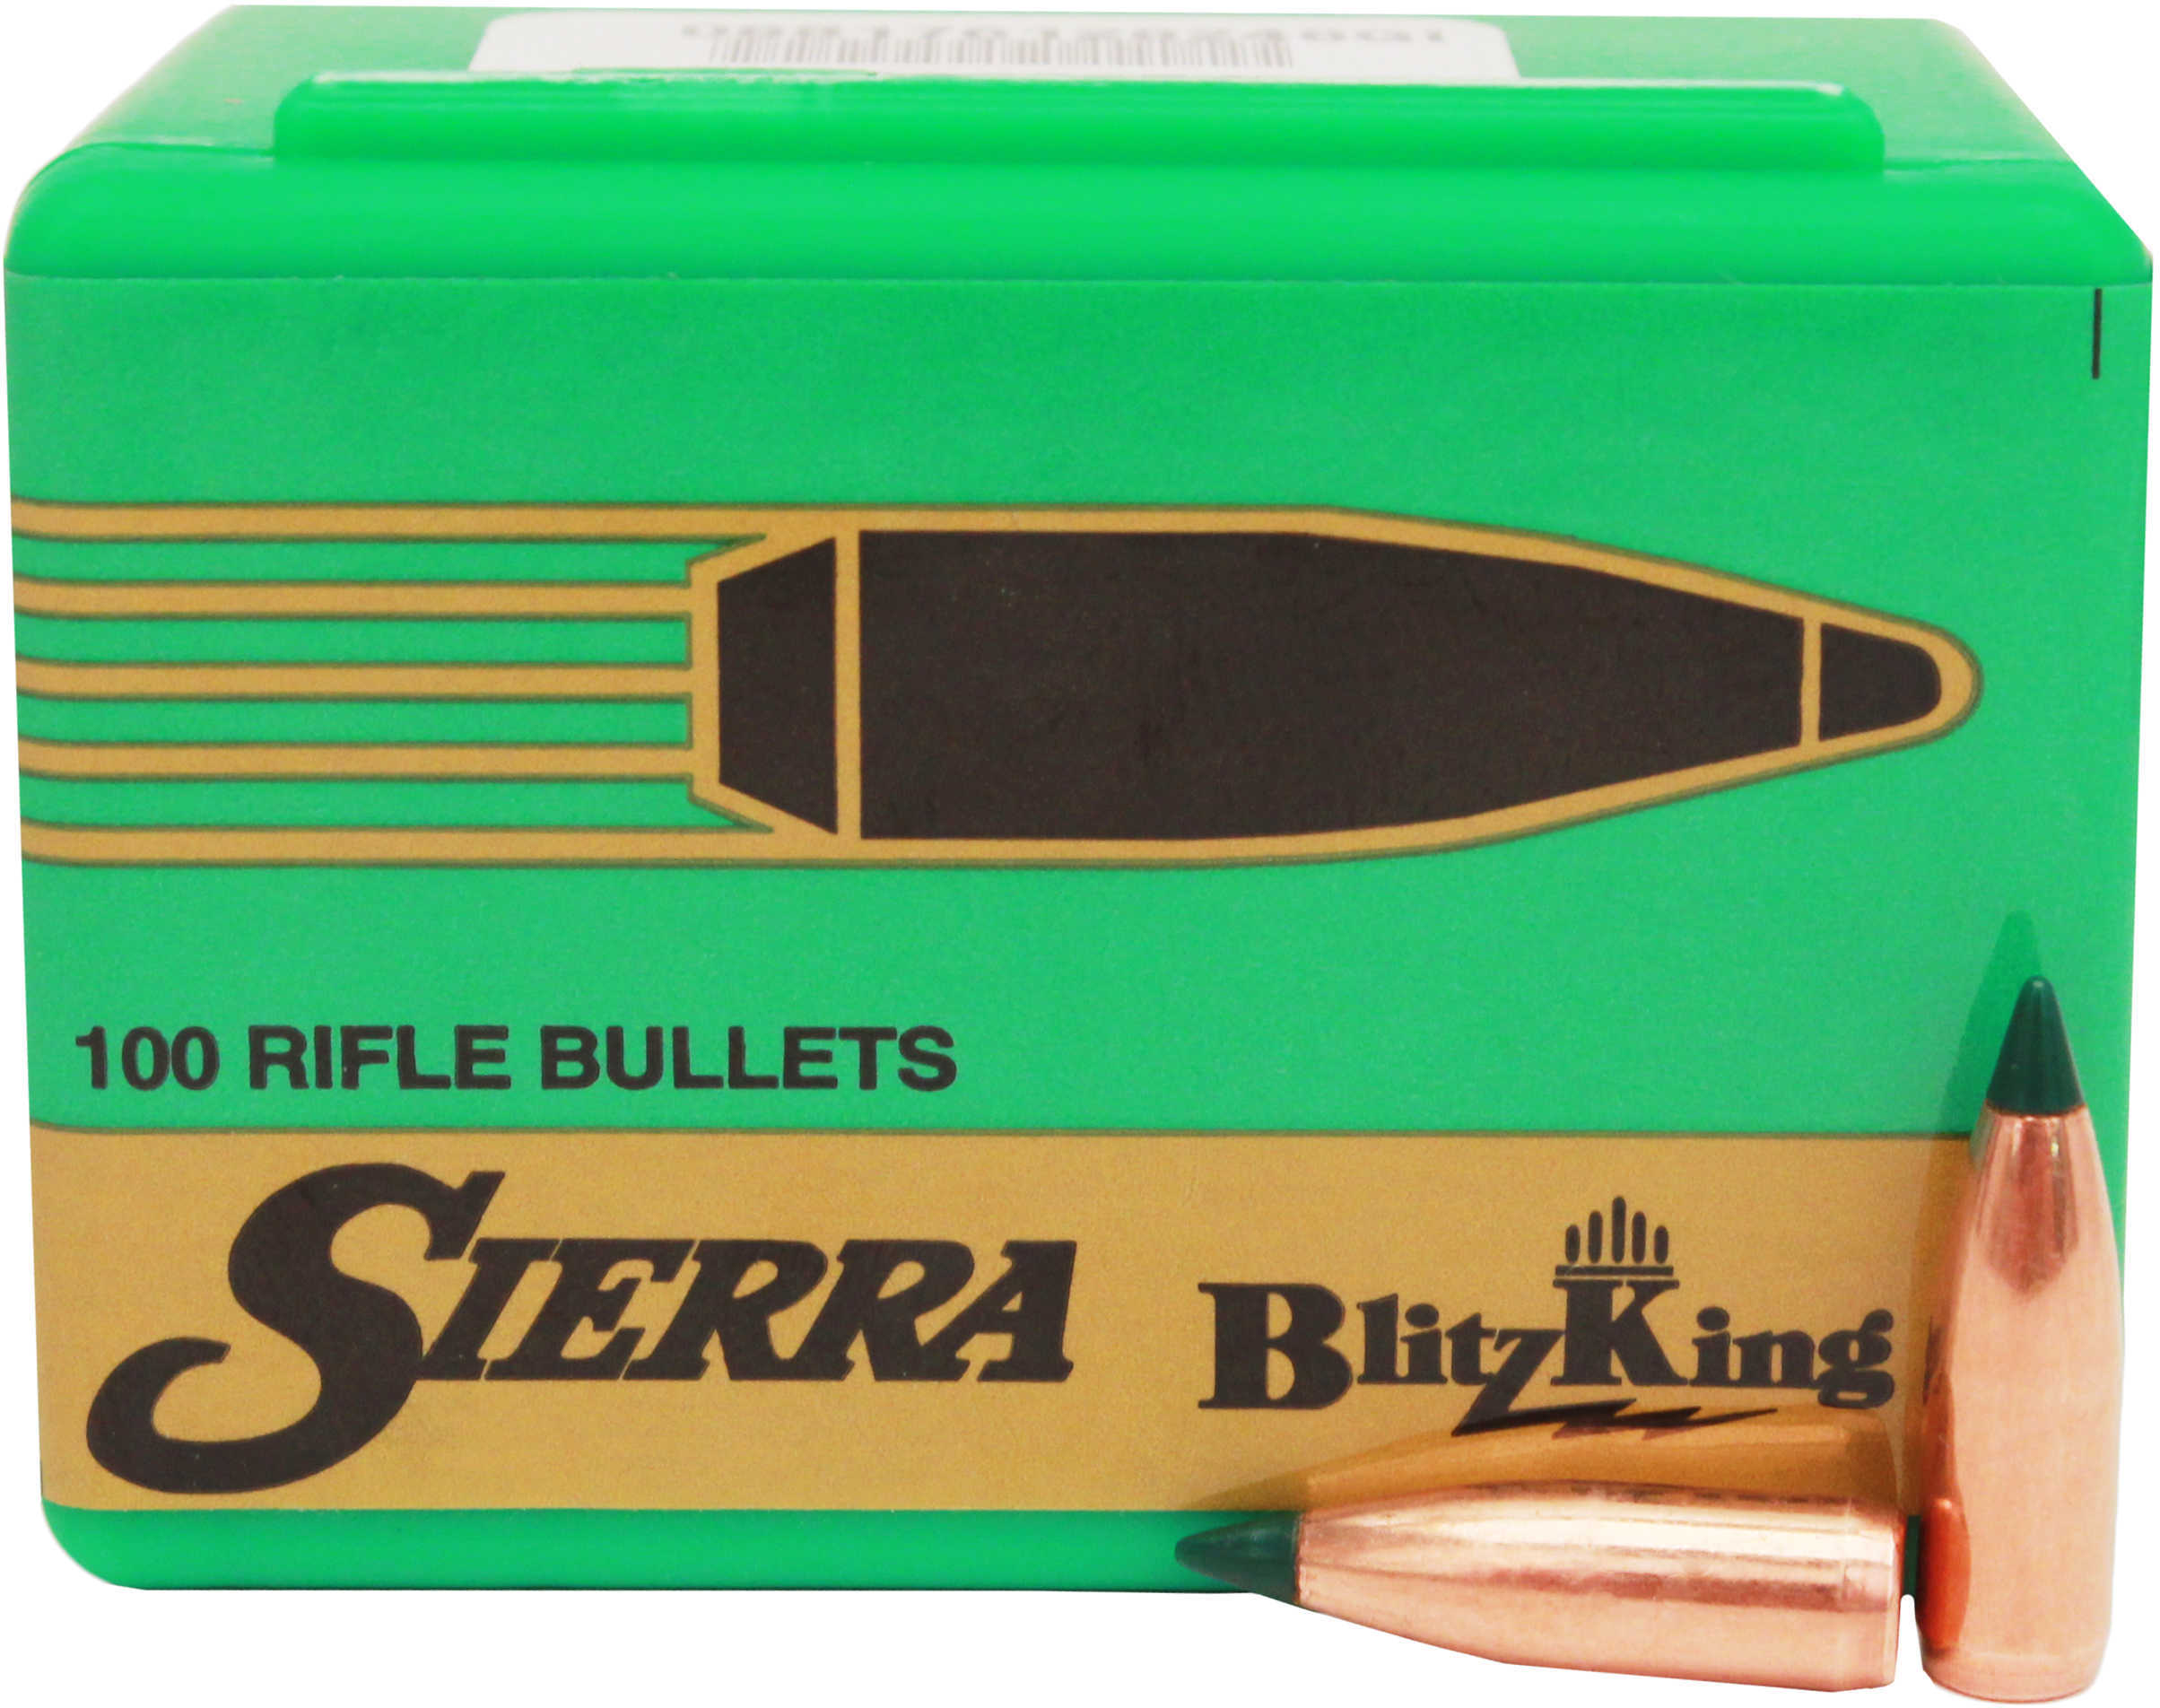 Sierra 22 Caliber 55 Grains Blitzking .224" 100/Box Bullets